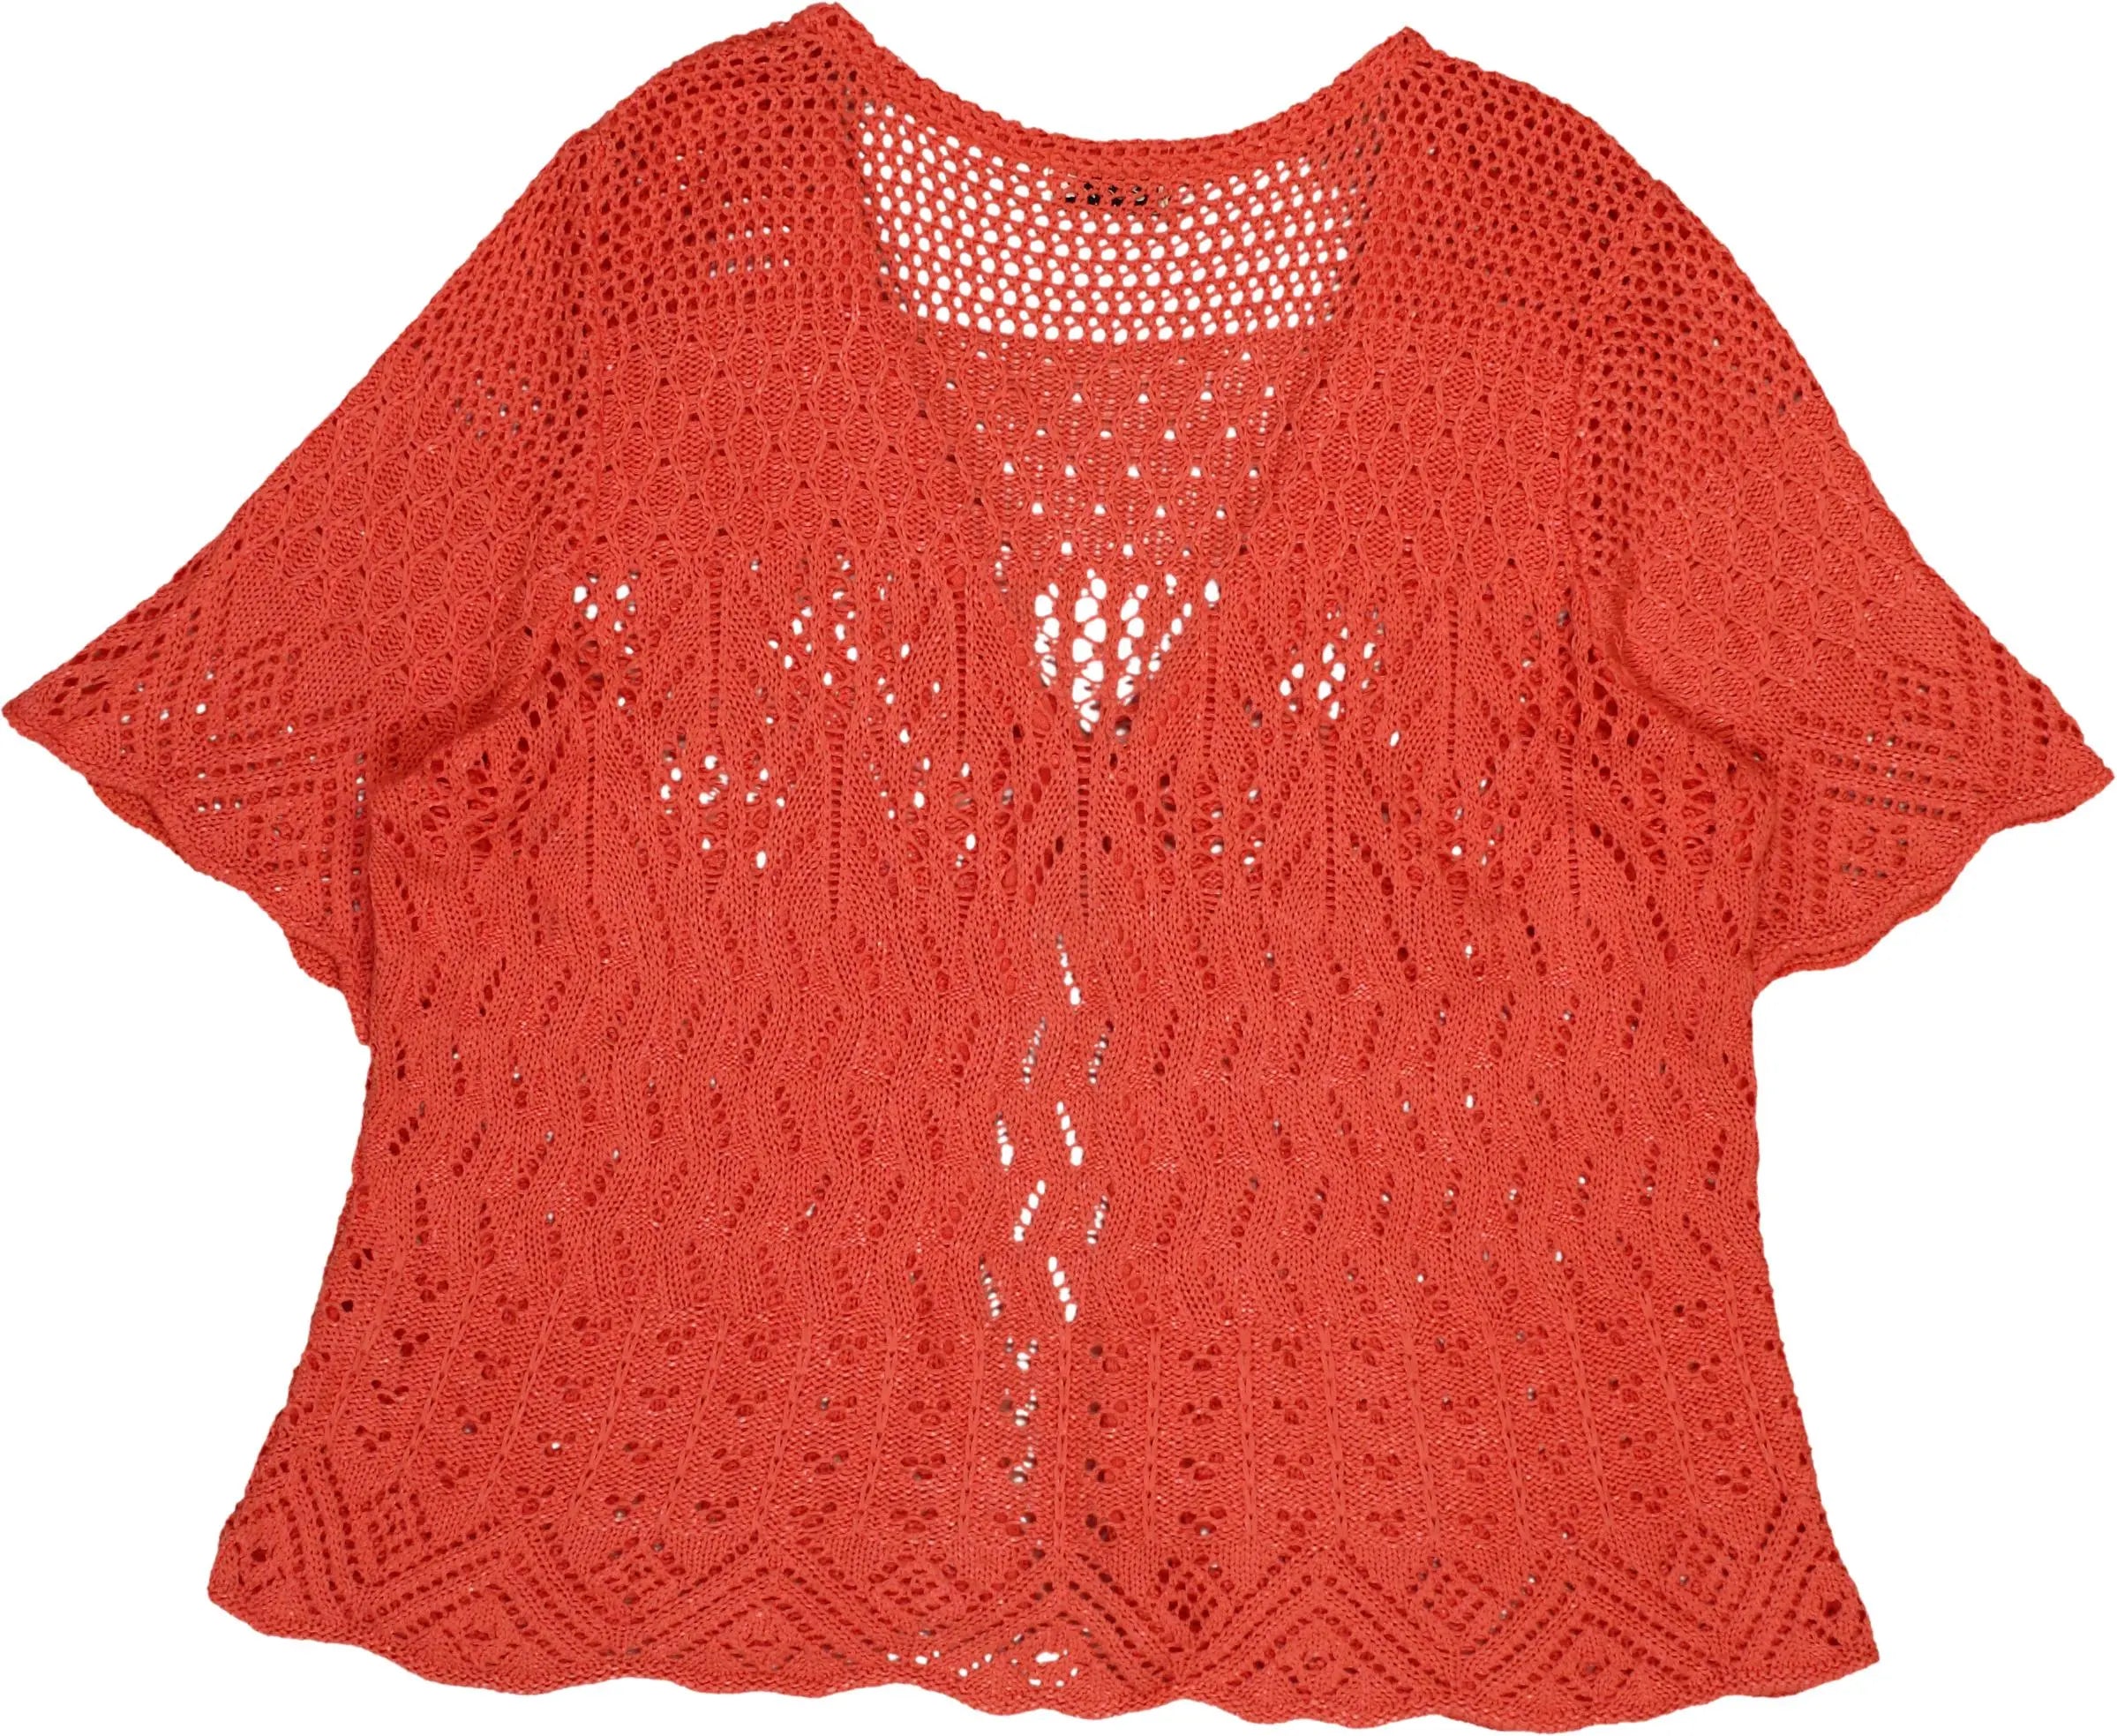 Miss Etam - Crochet Cardigan- ThriftTale.com - Vintage and second handclothing